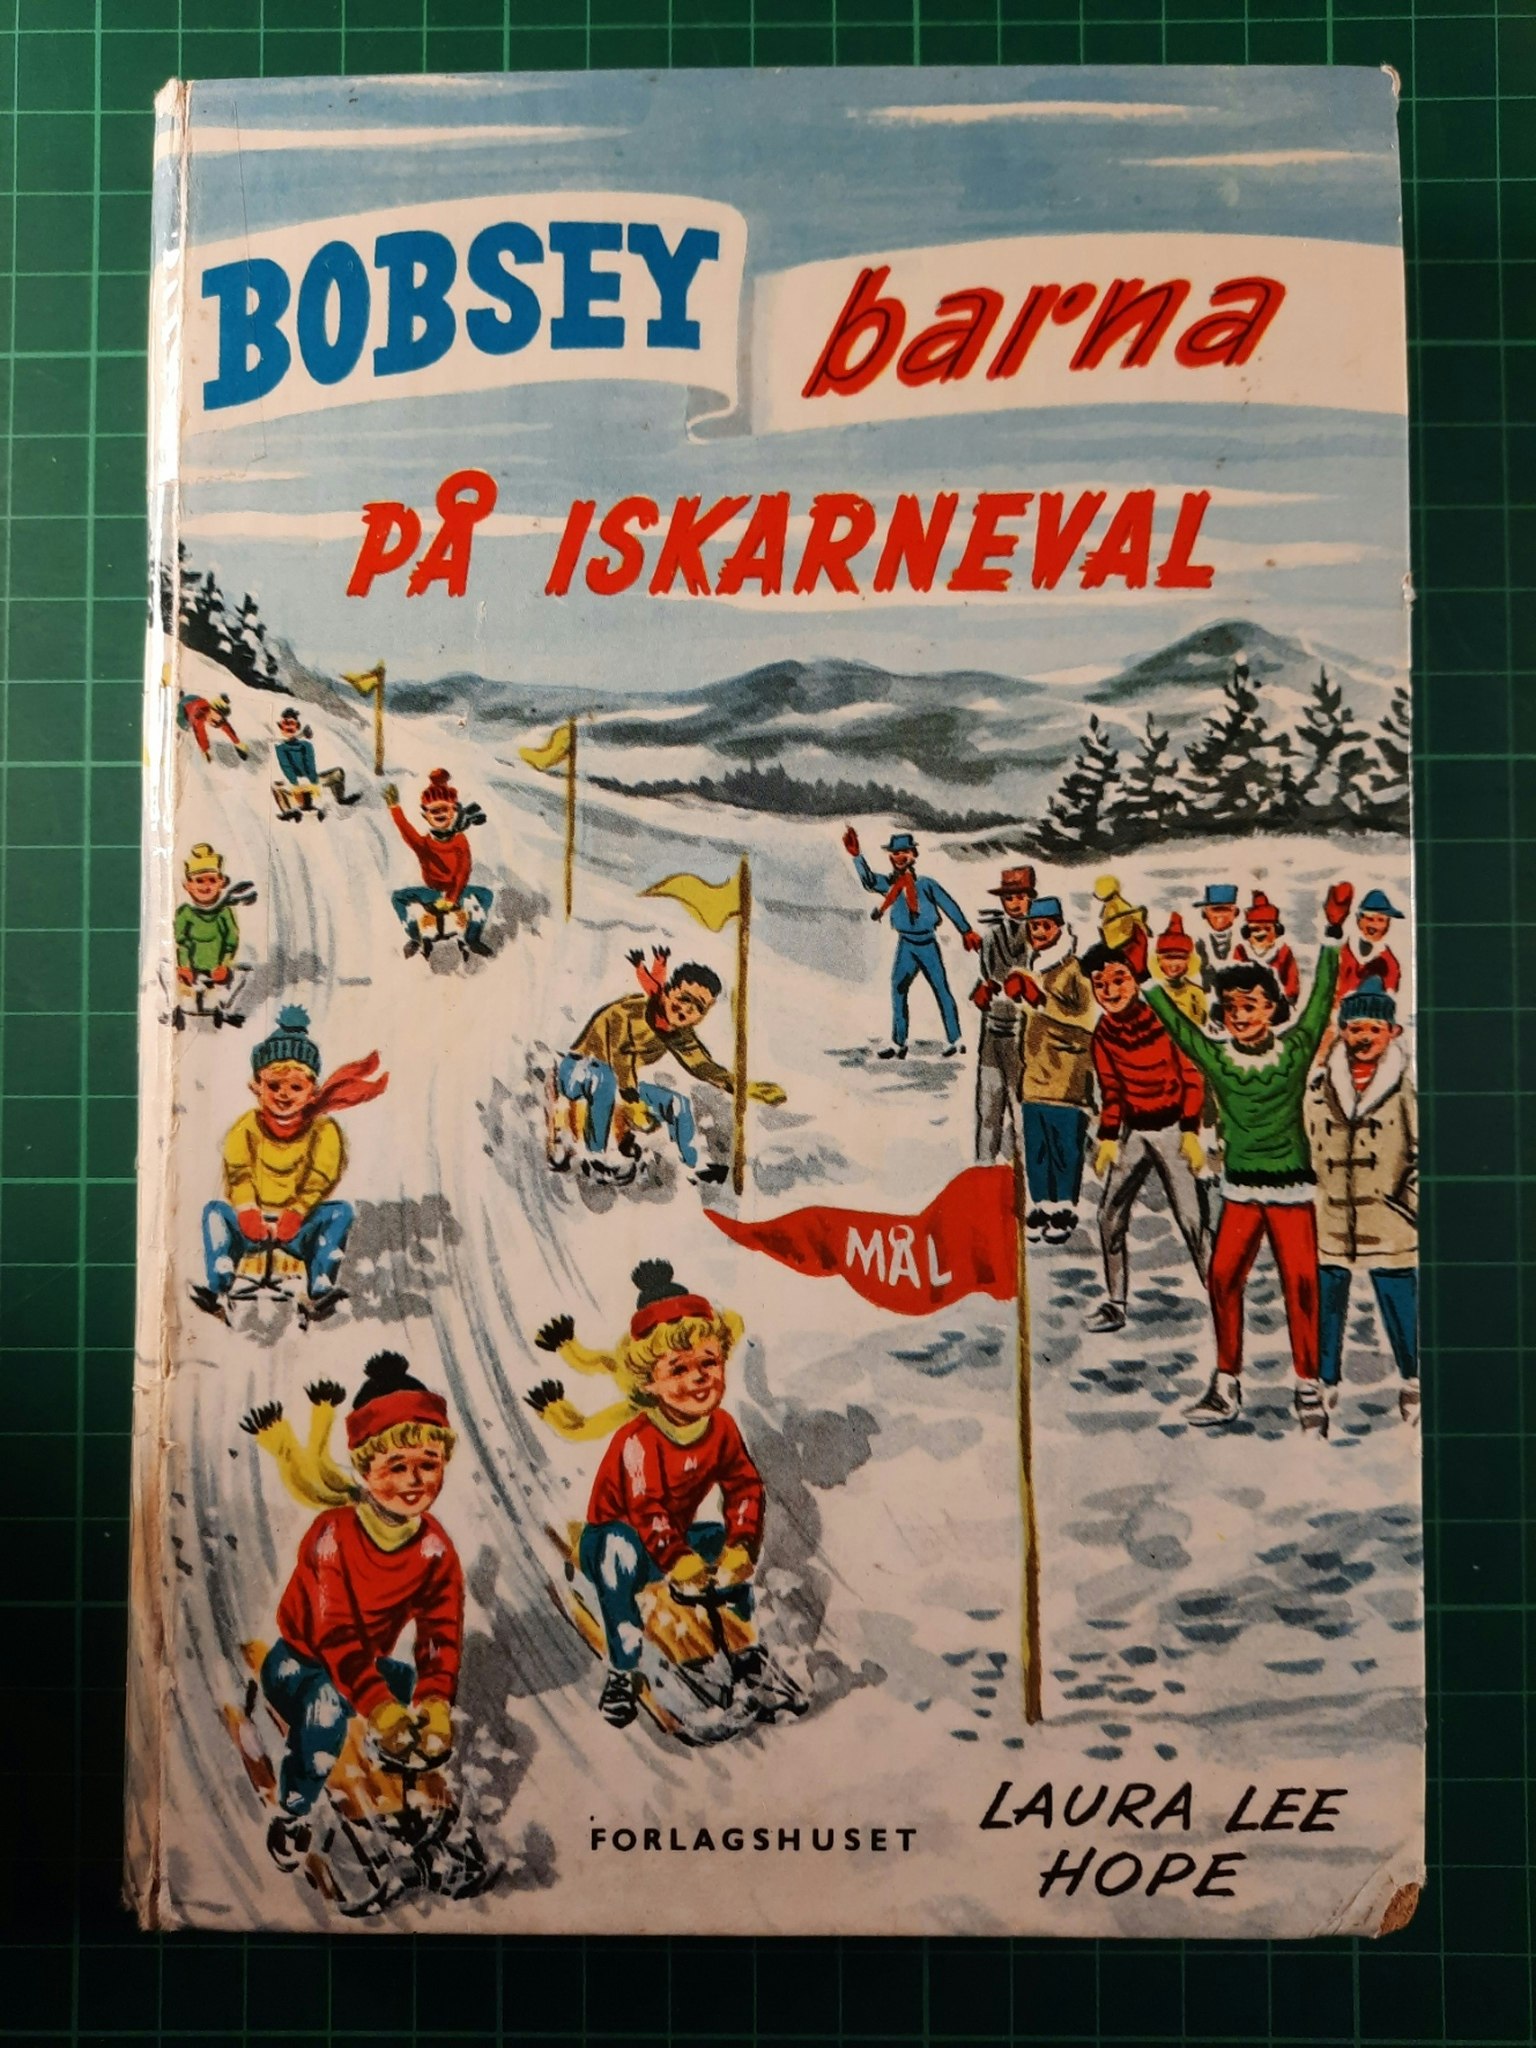 Bok 29 Bobsey barna På iskarneval (slitt)